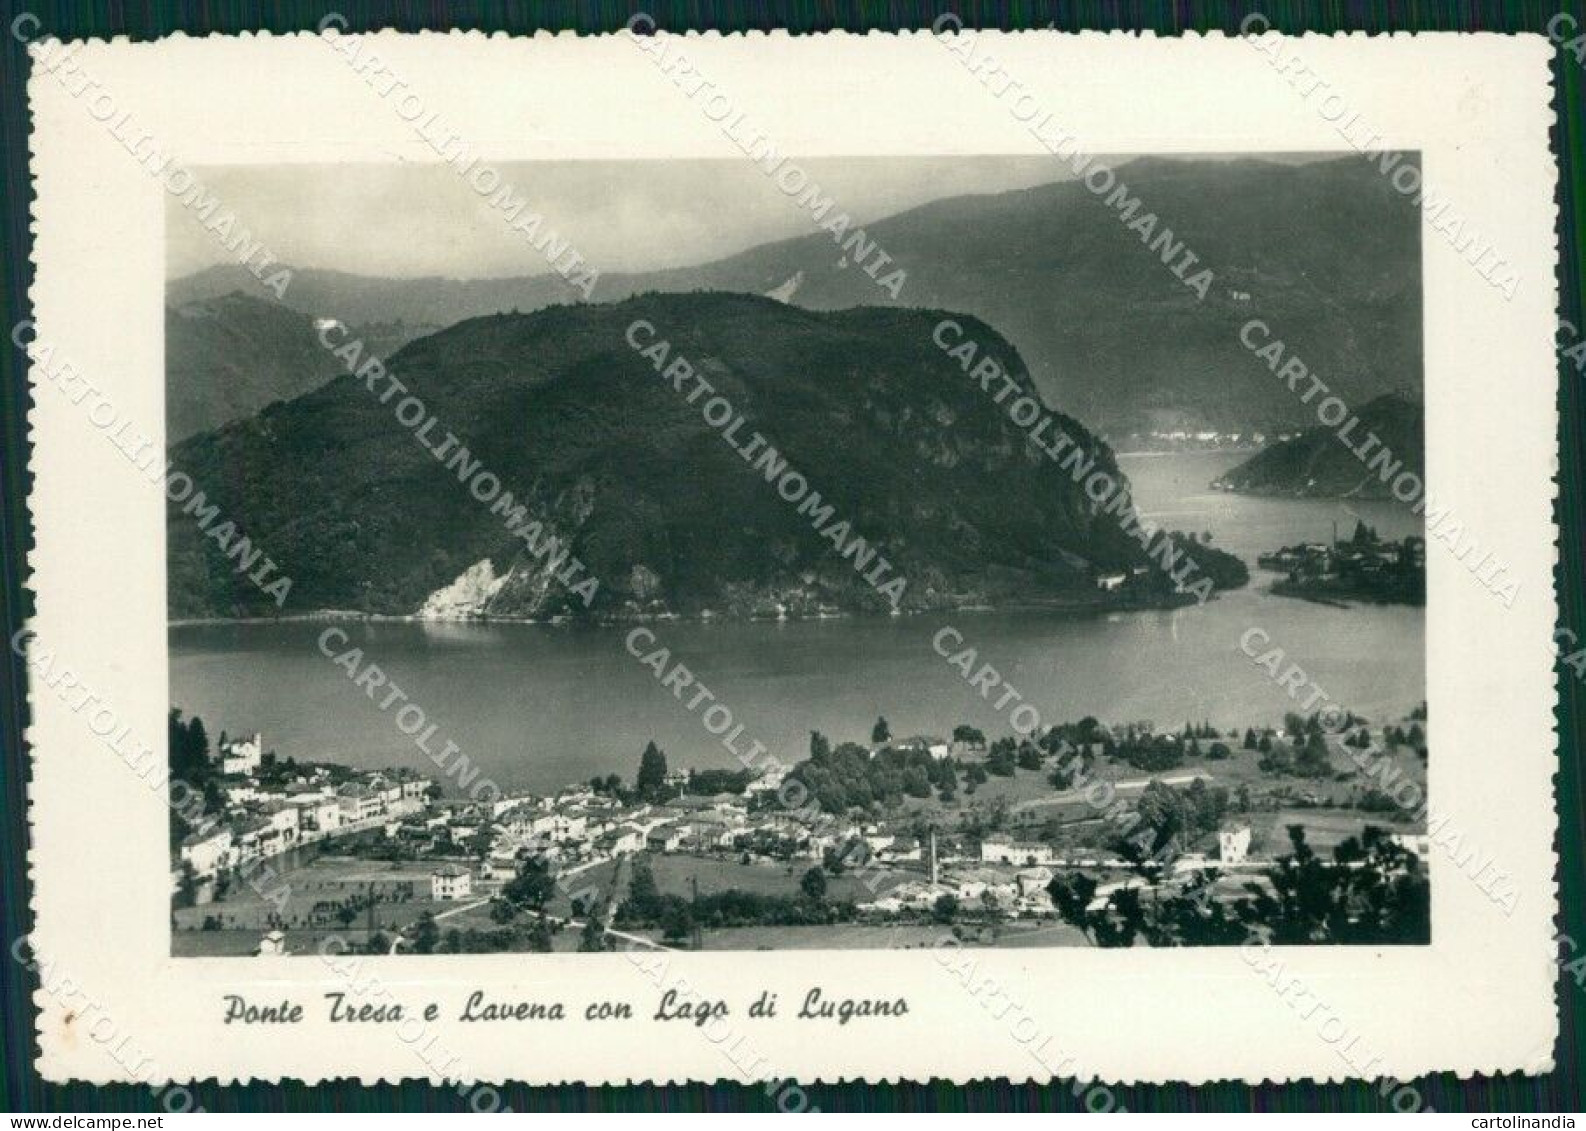 Svizzera Ponte Tresa Lavena Lago Di Lugano PIEGHINA FG Foto Cartolina HB4965 - Sondrio